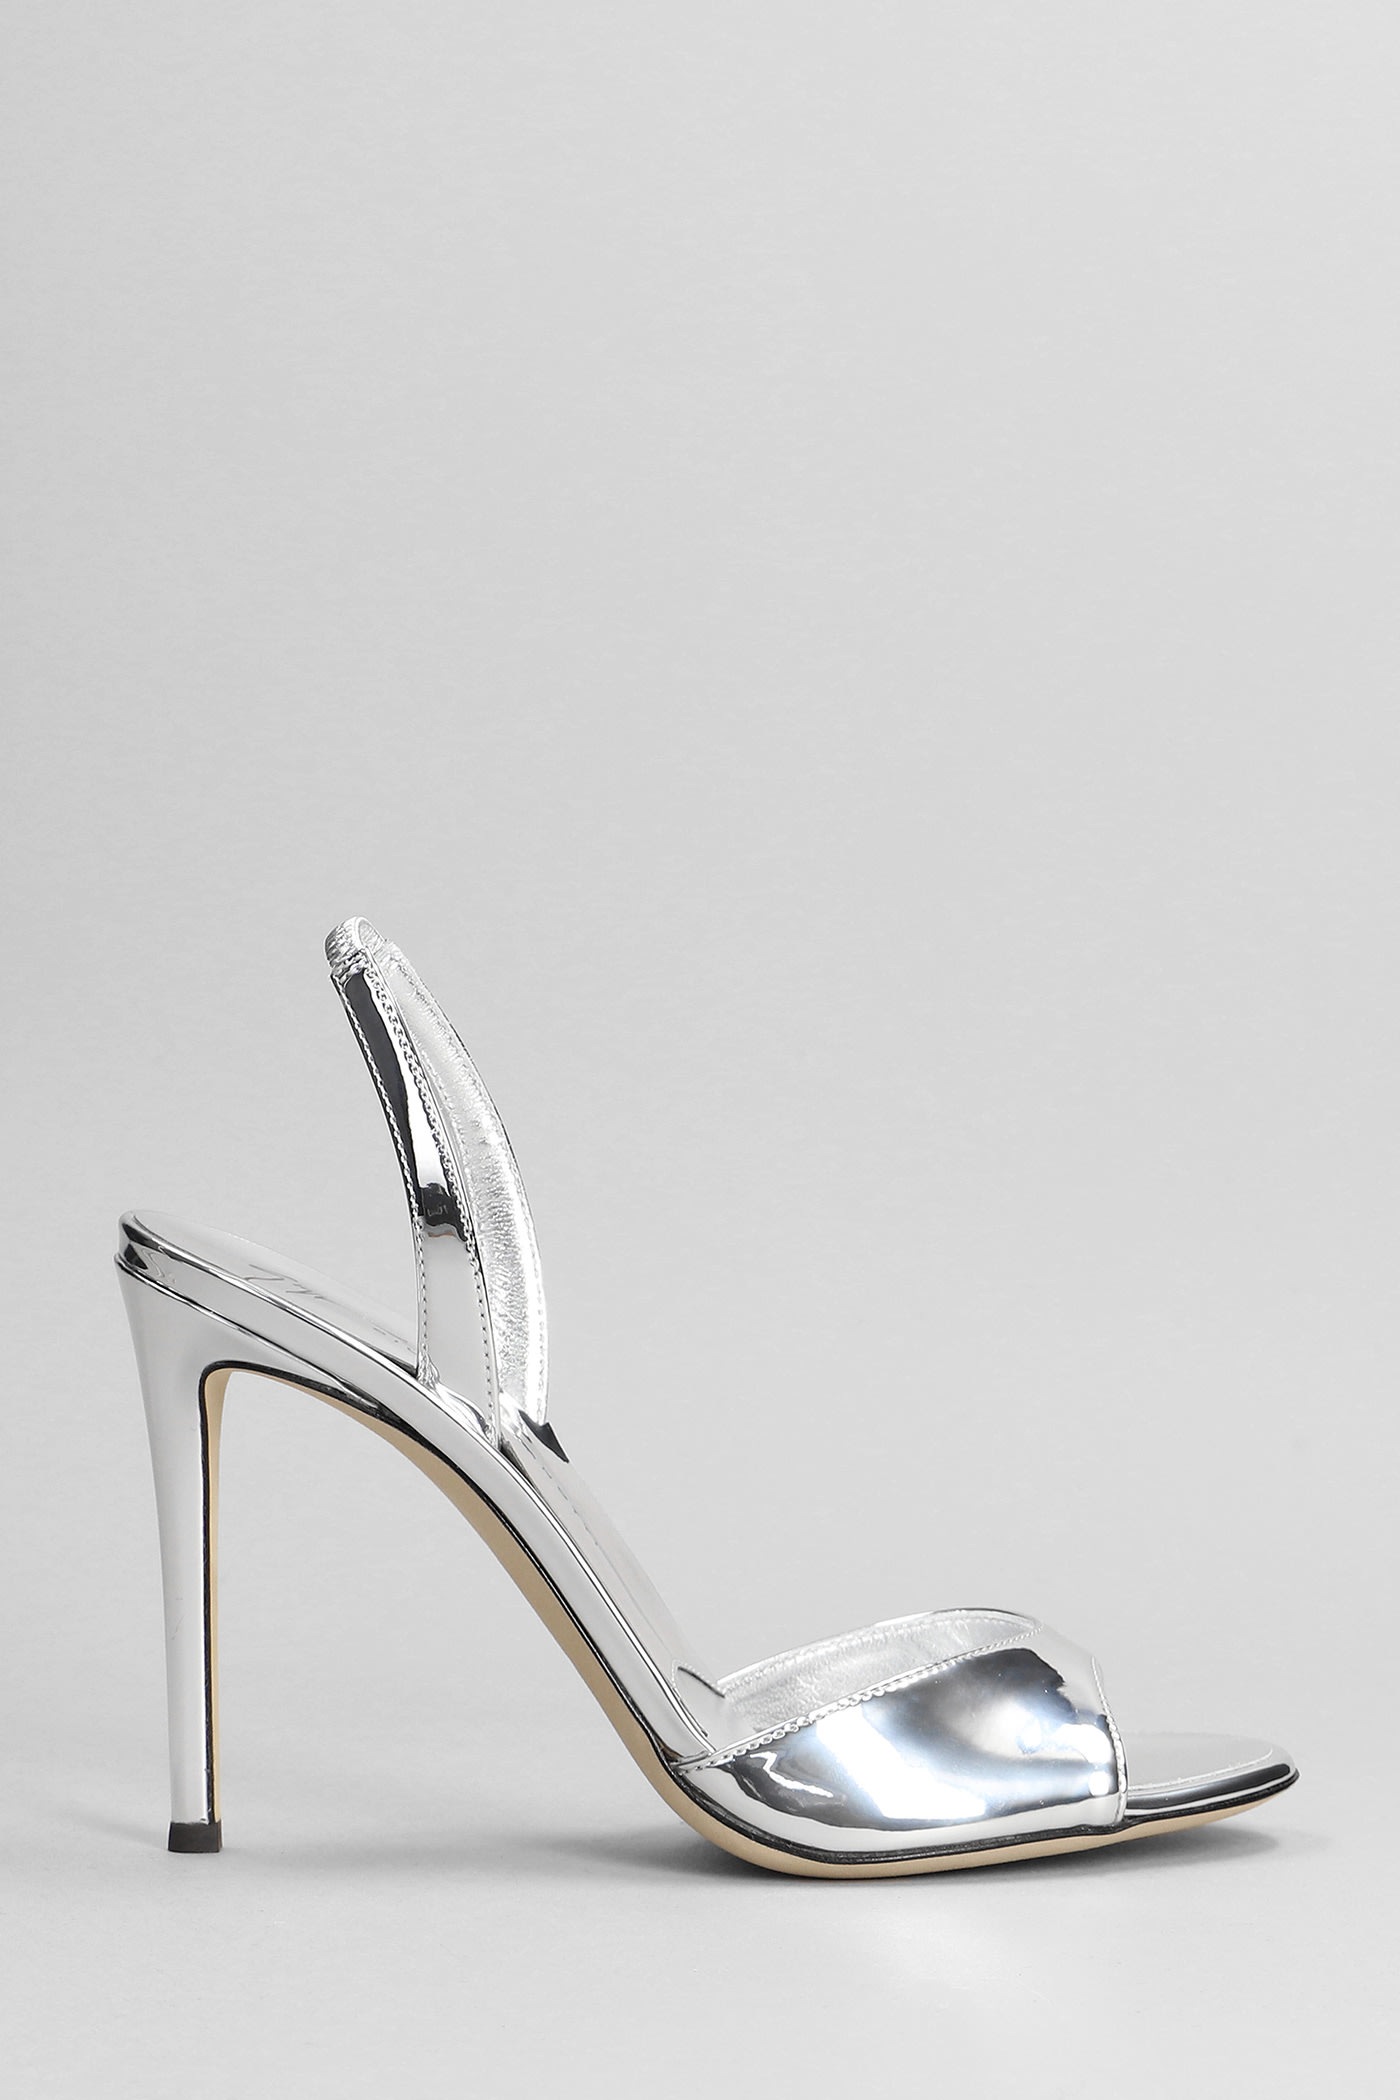 Giuseppe Zanotti Sandals In Silver Leather